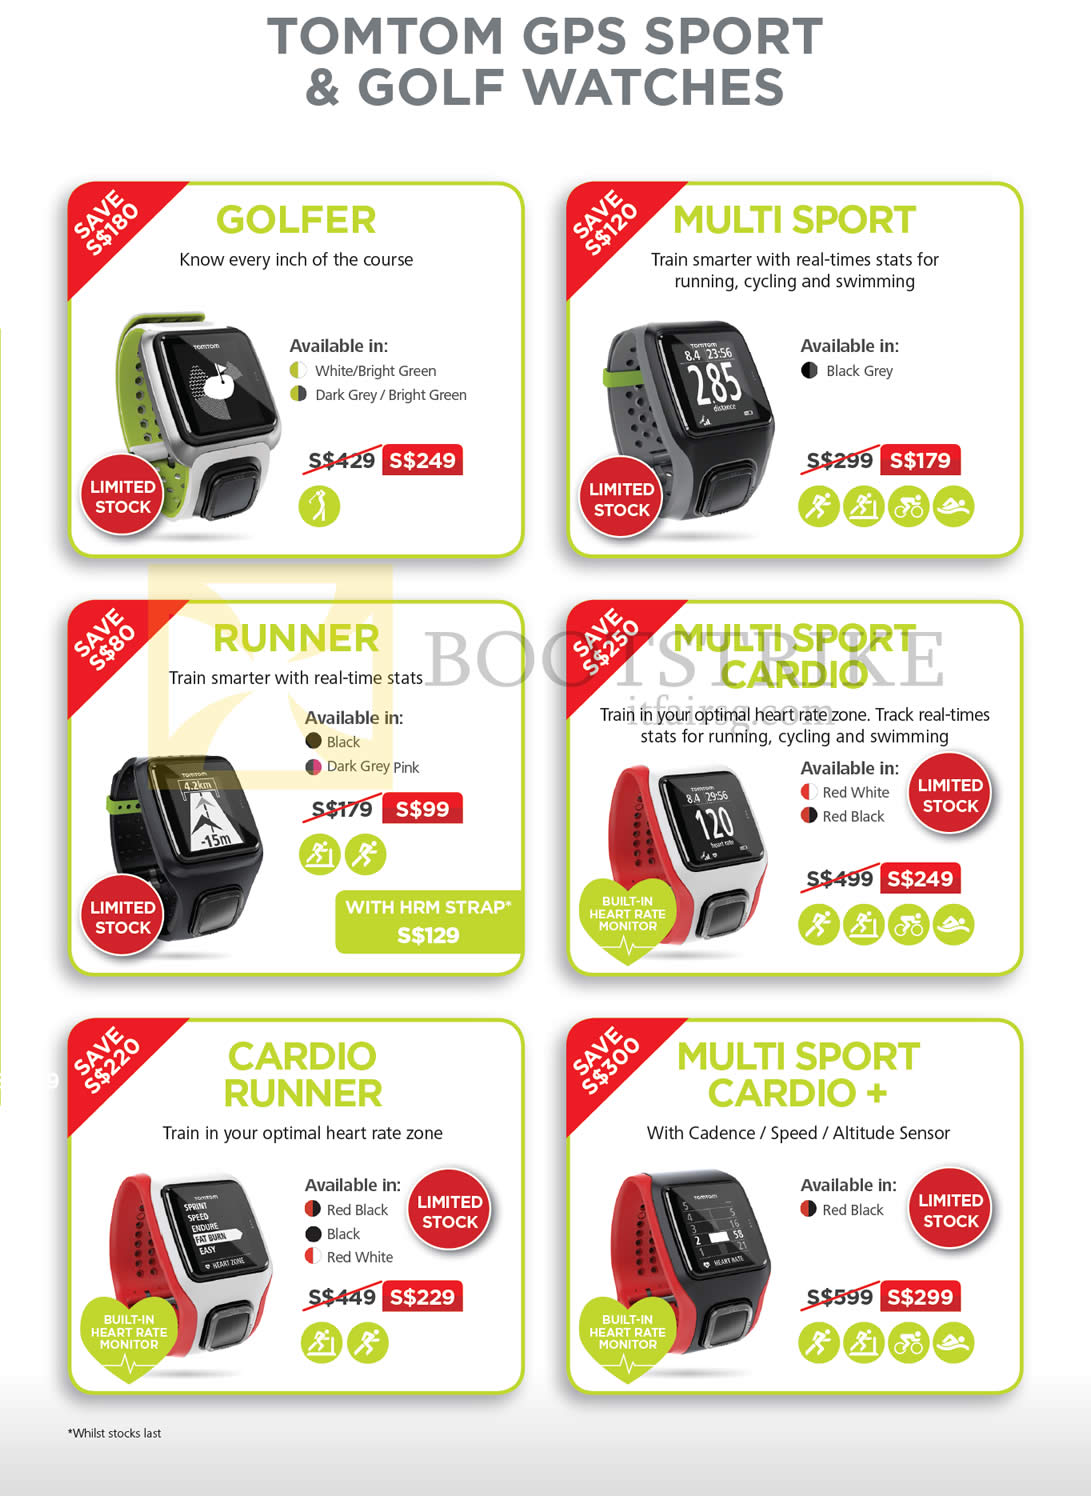 PC SHOW 2016 price list image brochure of TomTom GPS Sport, Golf Watches, Golfer, Multi Sport, Runner, Multi Sport Cardio, Cardio Runner, Multi Sport Cardio